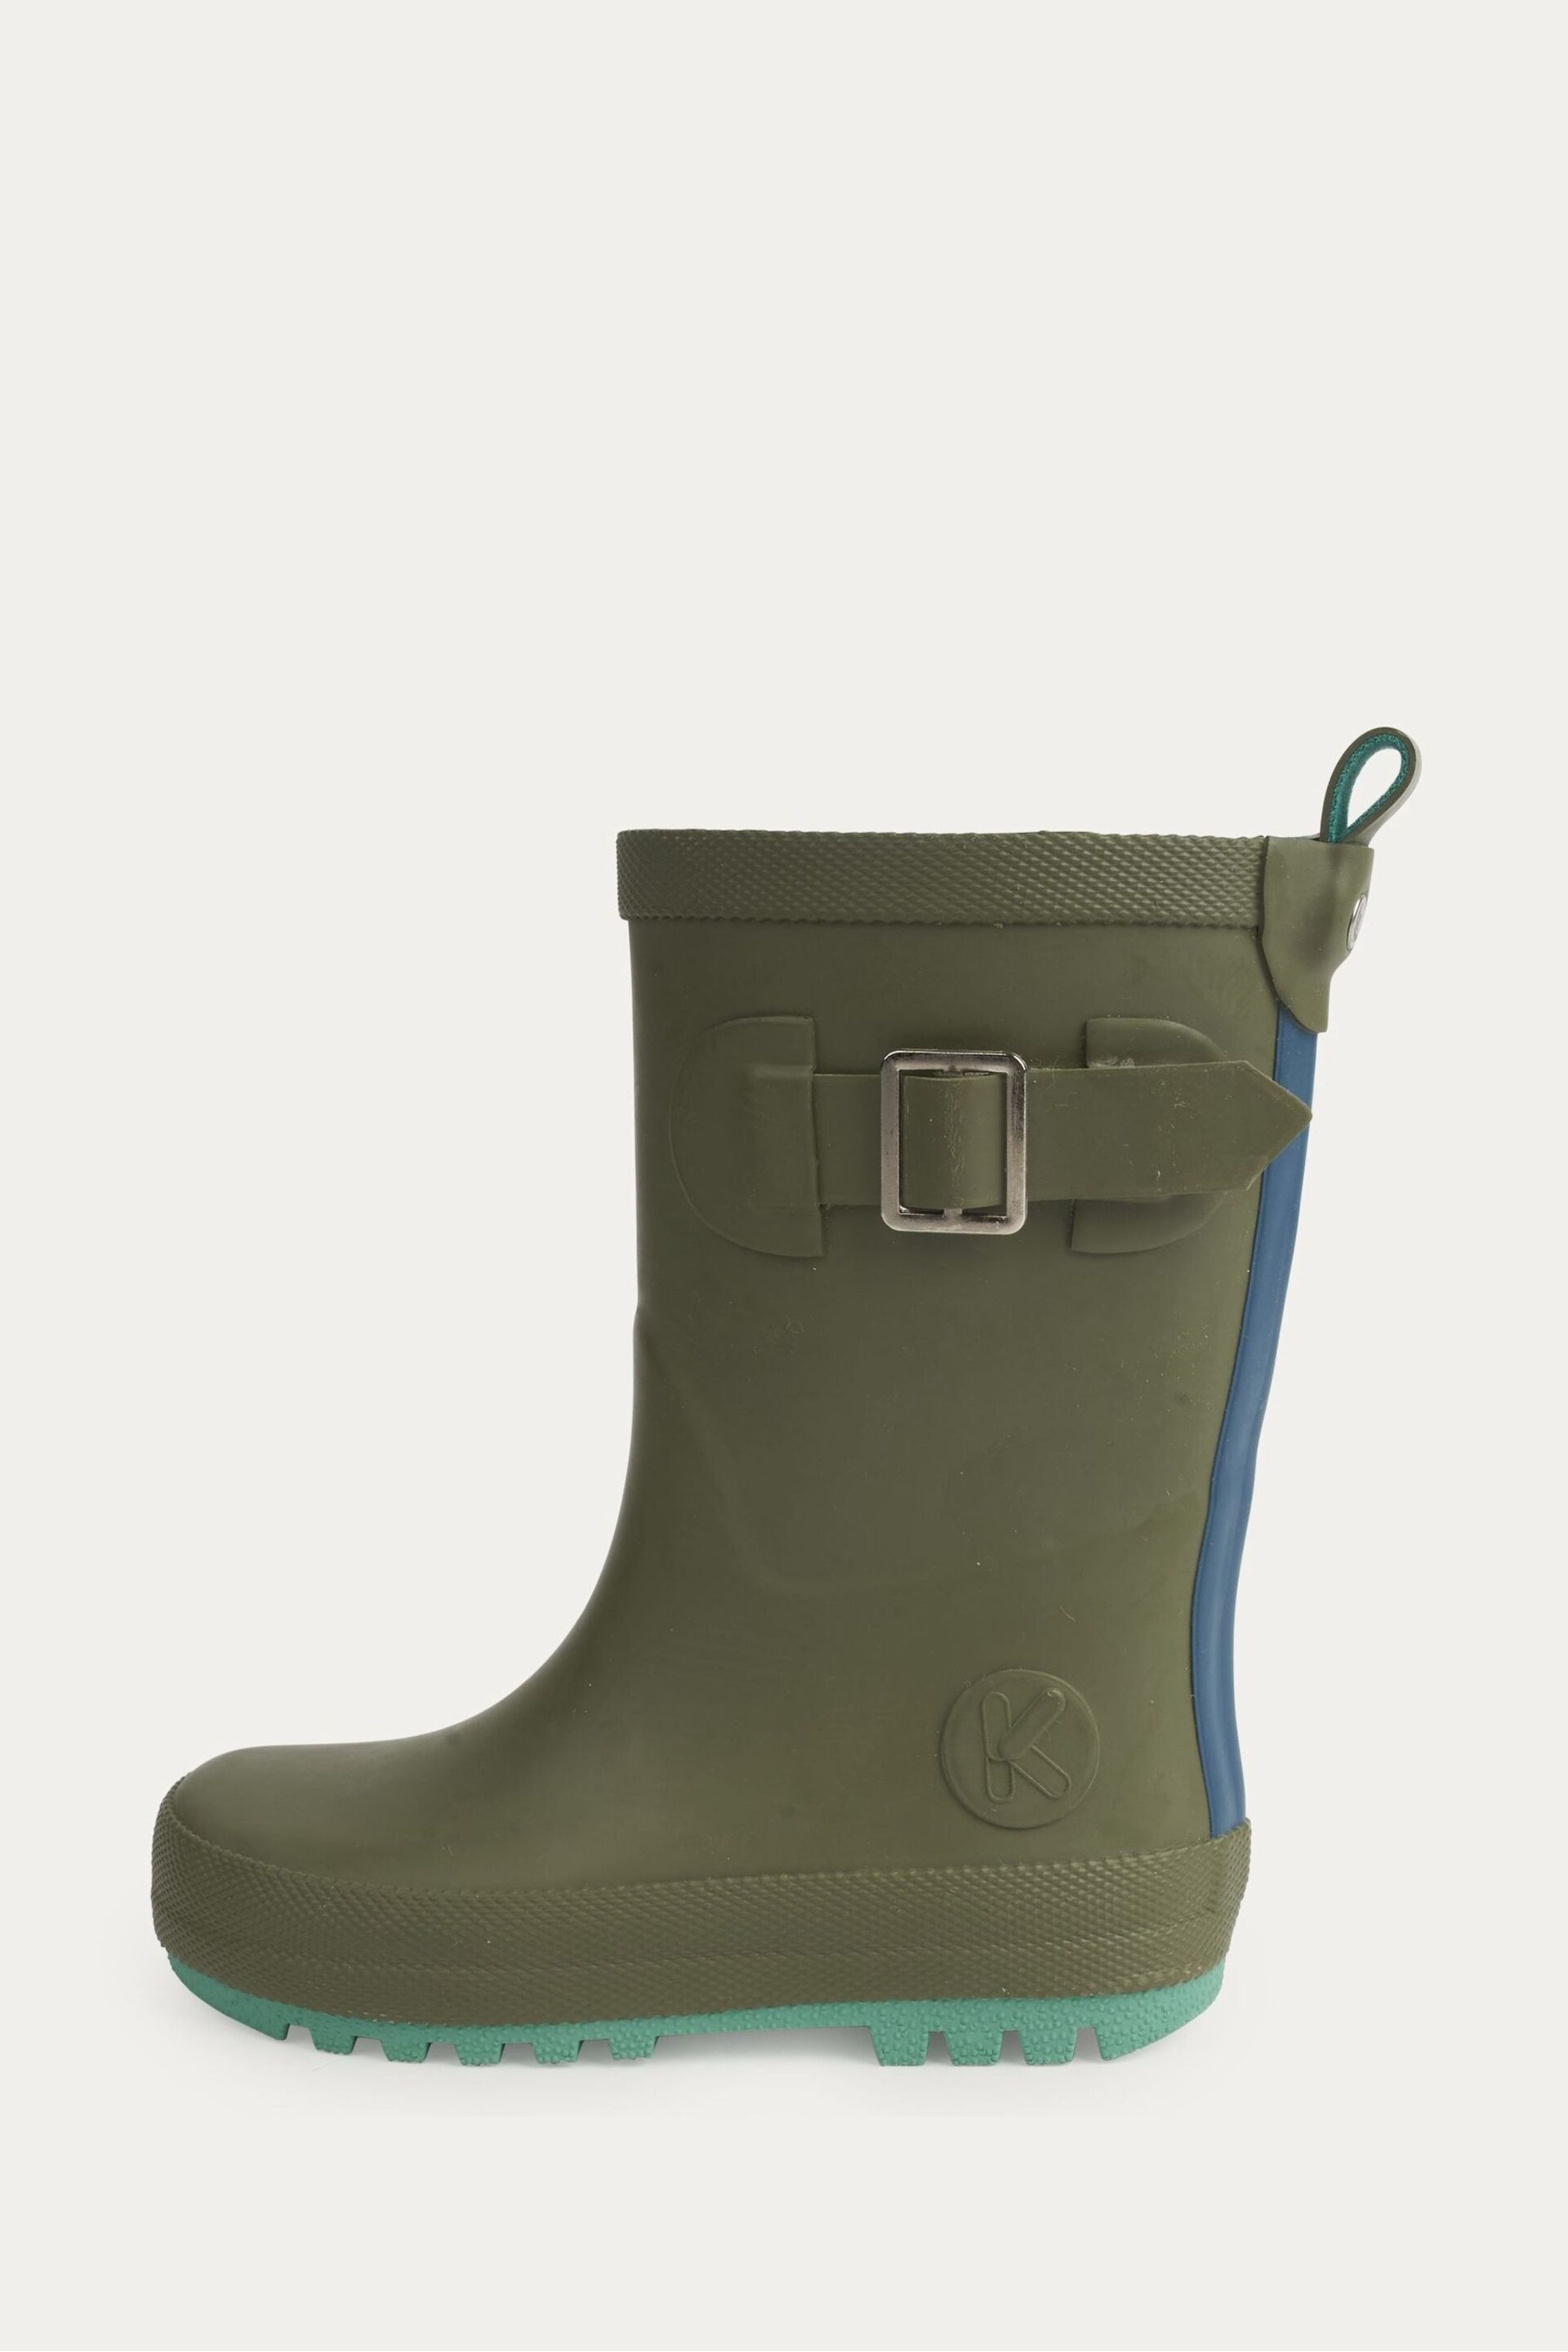 KIDLY Rain Boots with Binding - Image 2 of 5